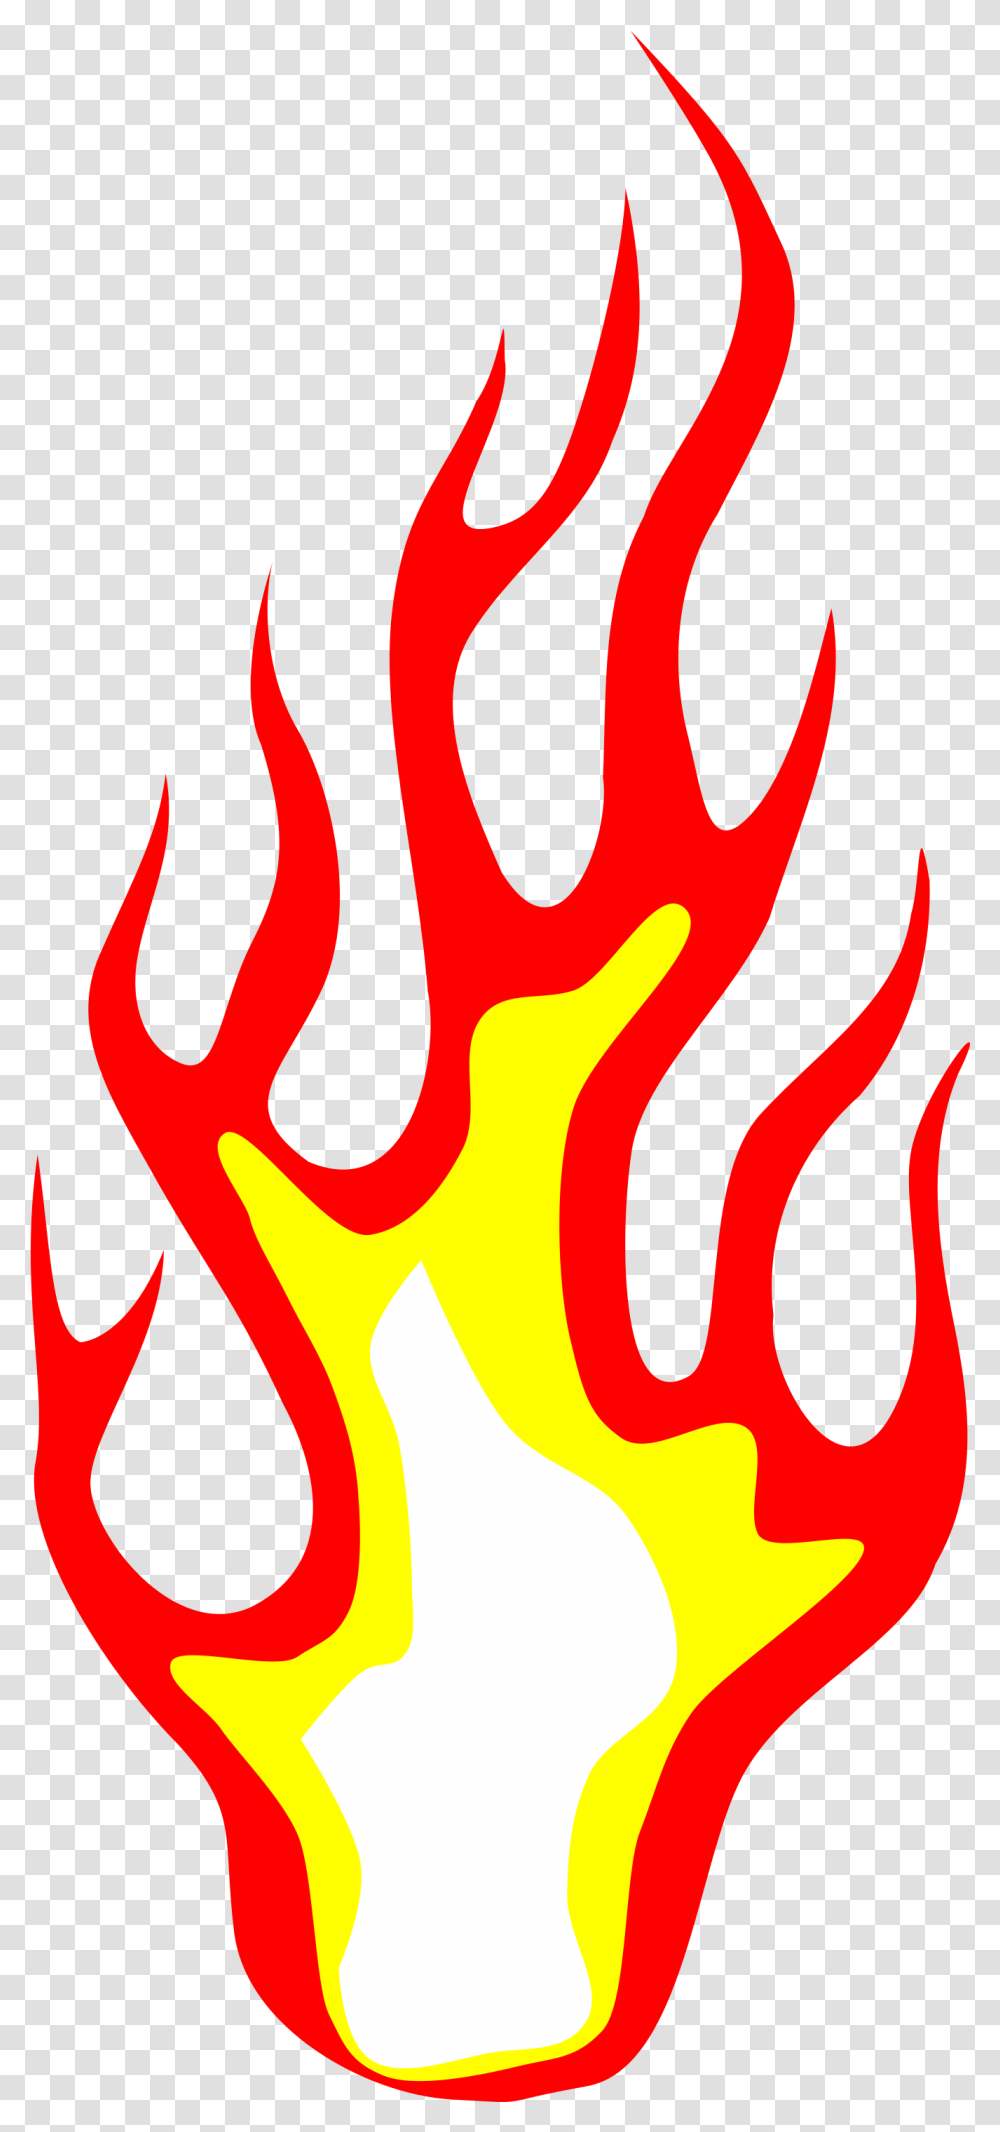 Fire Flame Clipart Onlygfxcom Cartoon Fire Flame, Hand, Stain, Bonfire, Microscope Transparent Png